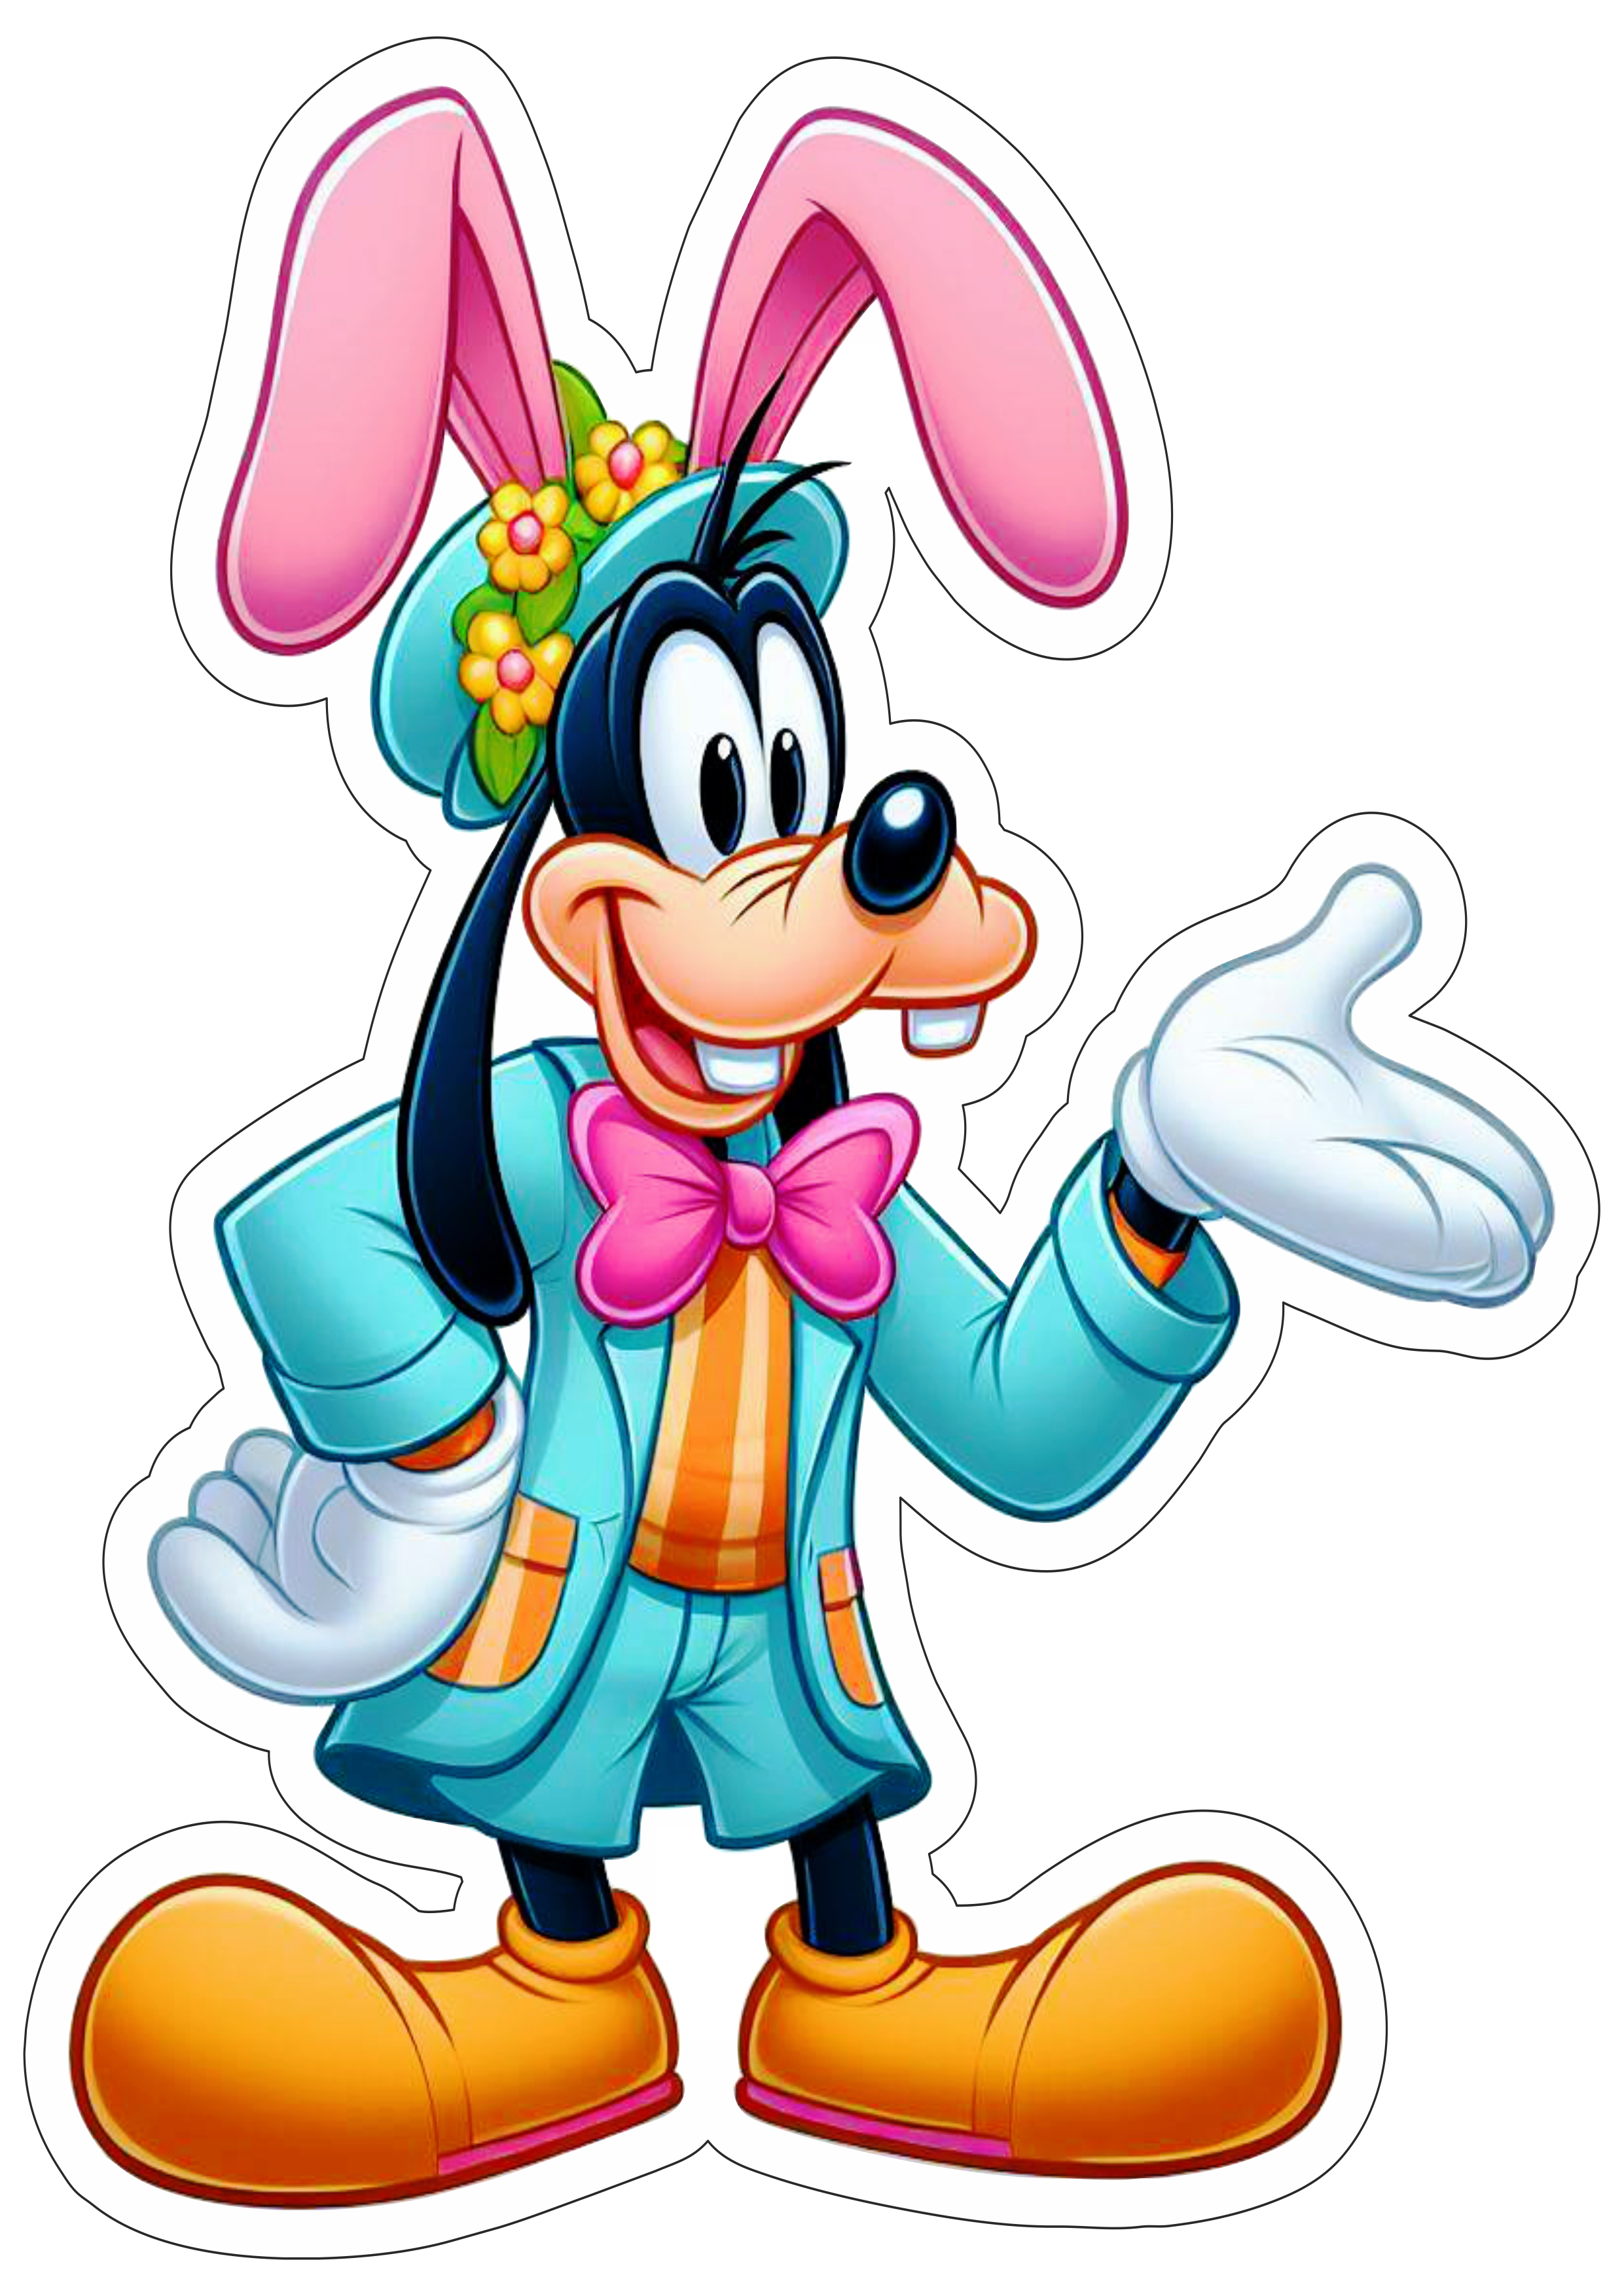 Turma do Mickey Mouse Pateta ovos de páscoa desenho infantil colorido clipart png